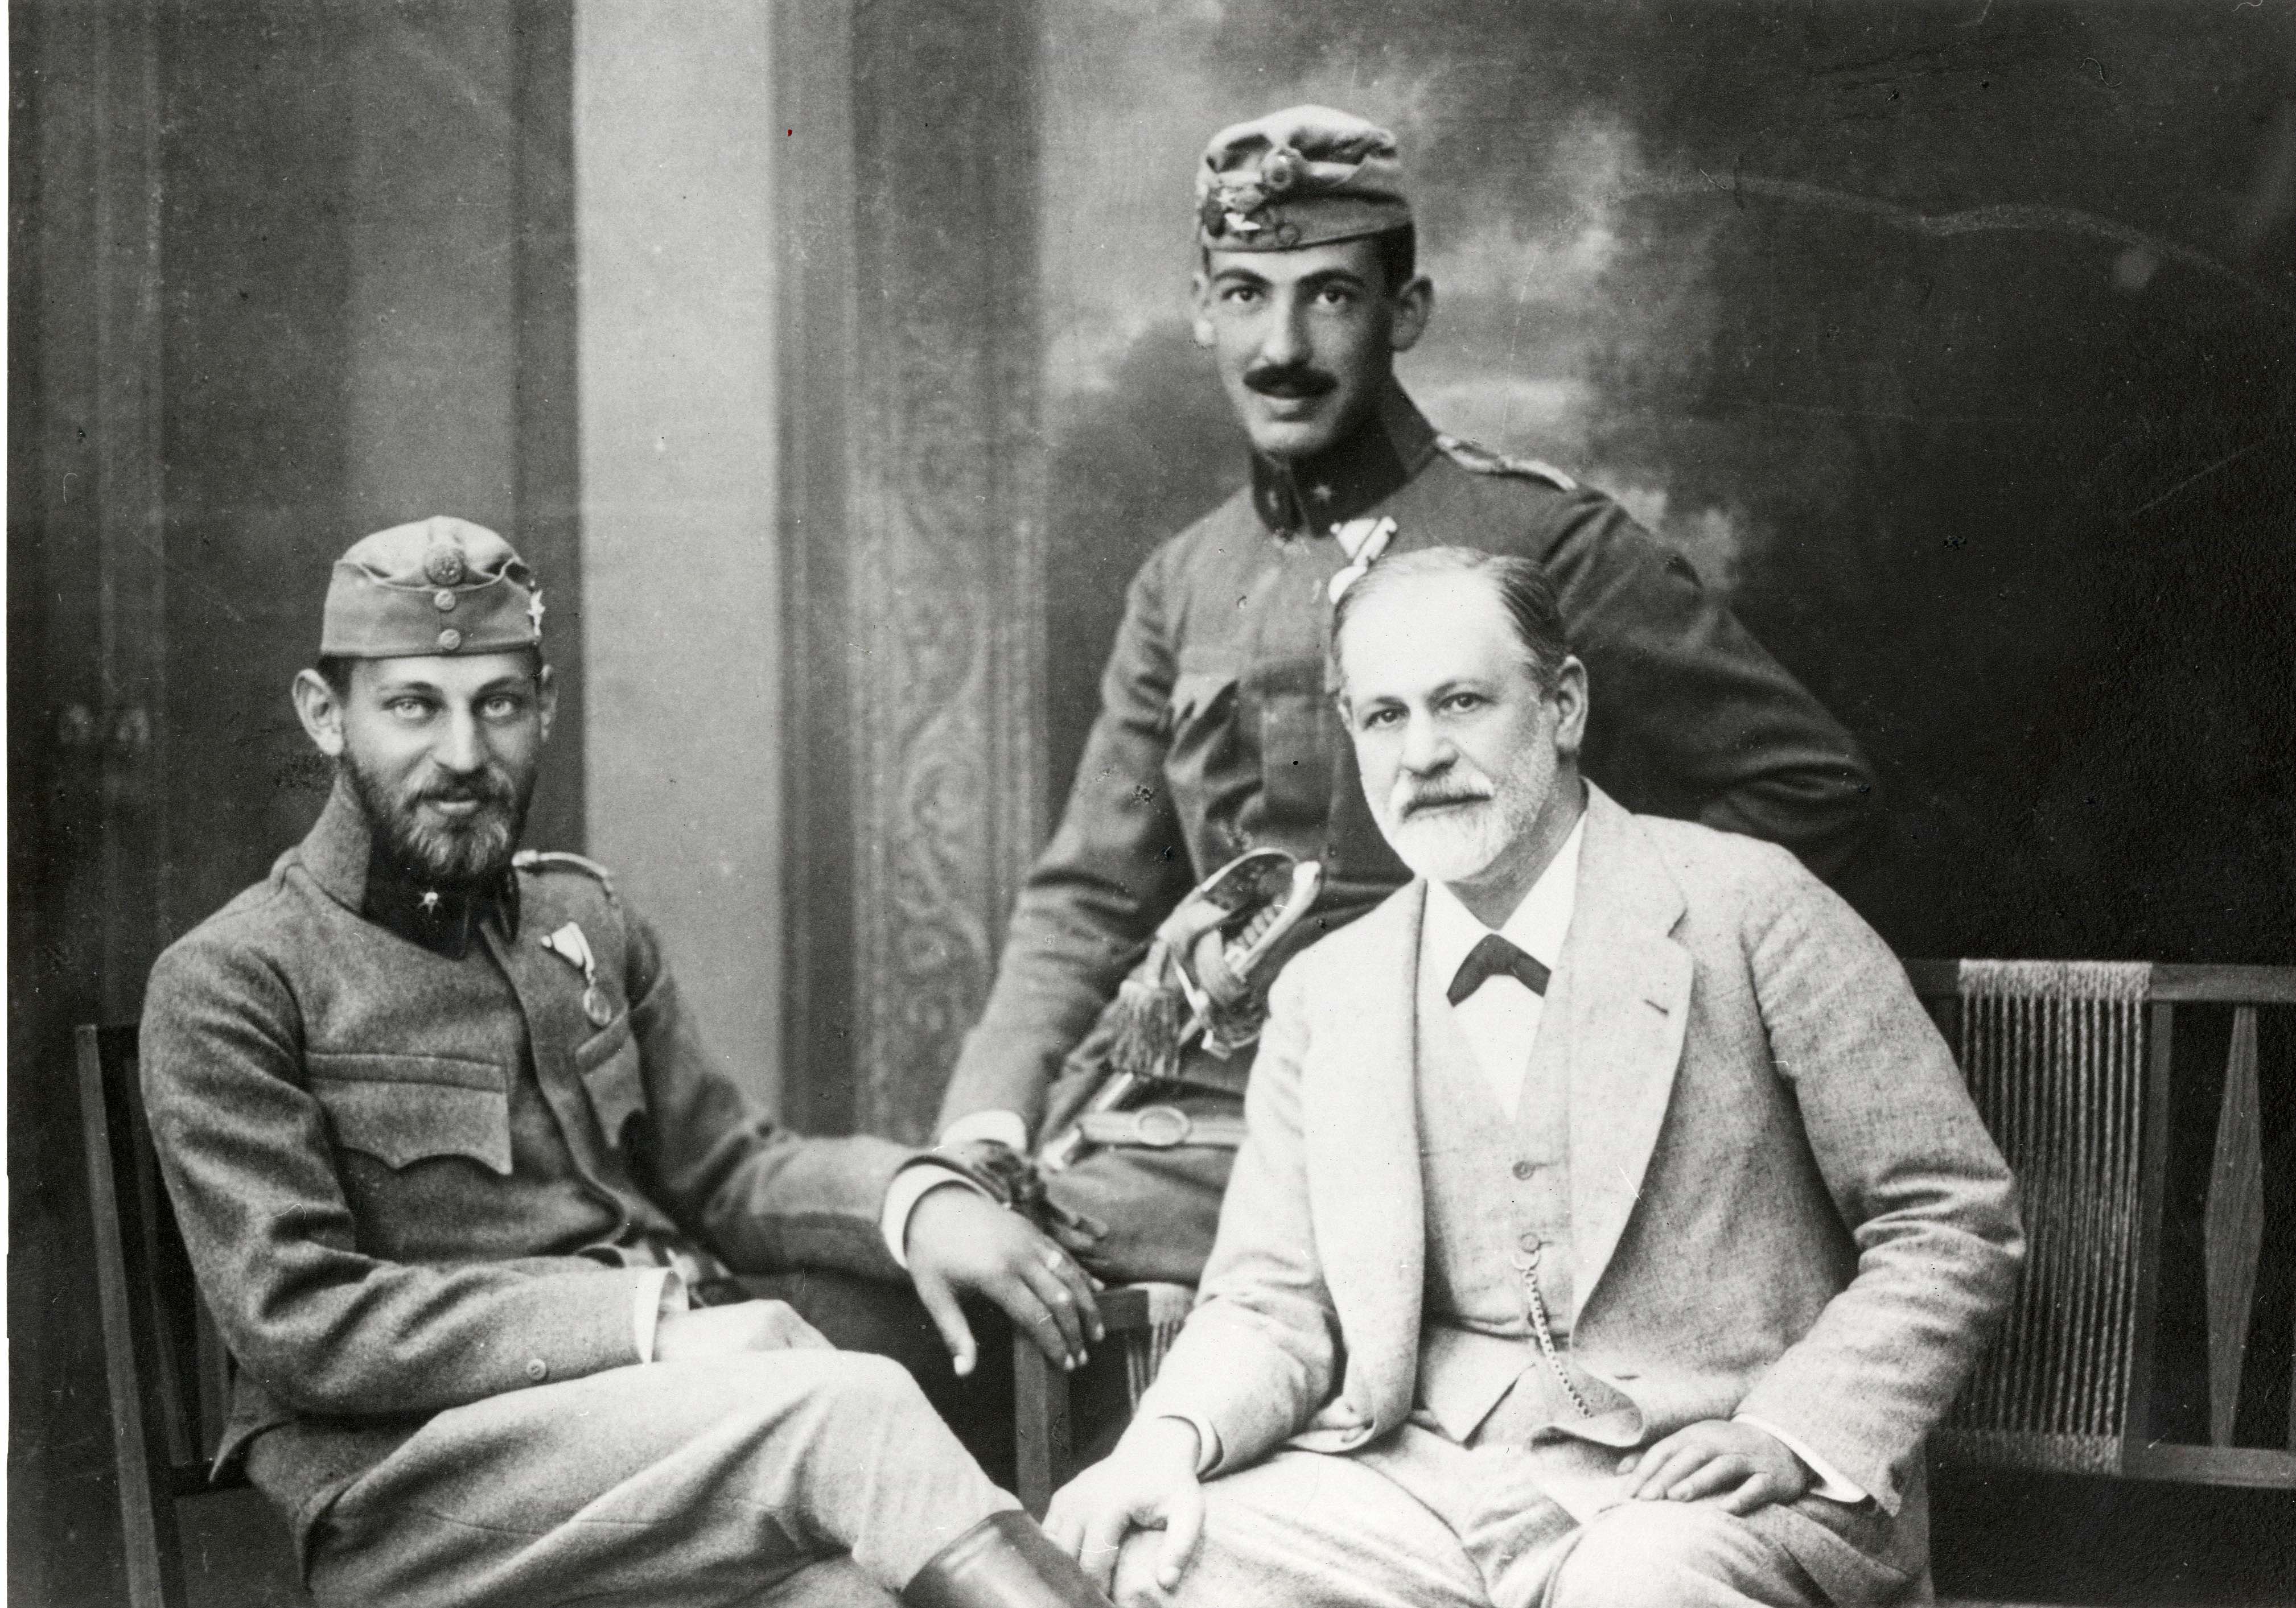 Sigmund Freud with sons Ernst and Martin in uniform (1916)